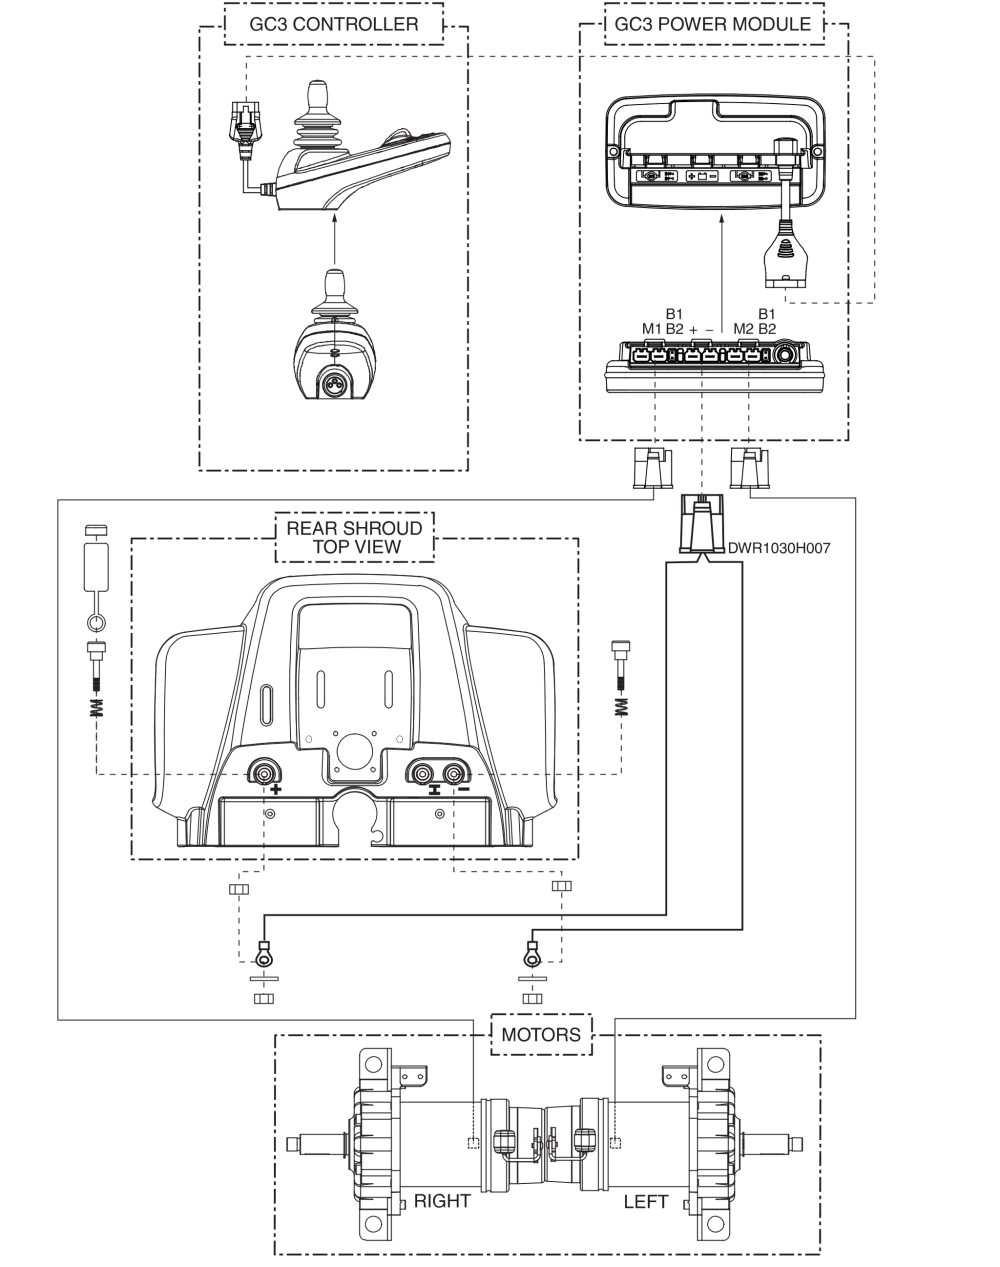 Electrical System Diagram, Gc3 Rear Electronics, Go-chair / Z-chair parts diagram